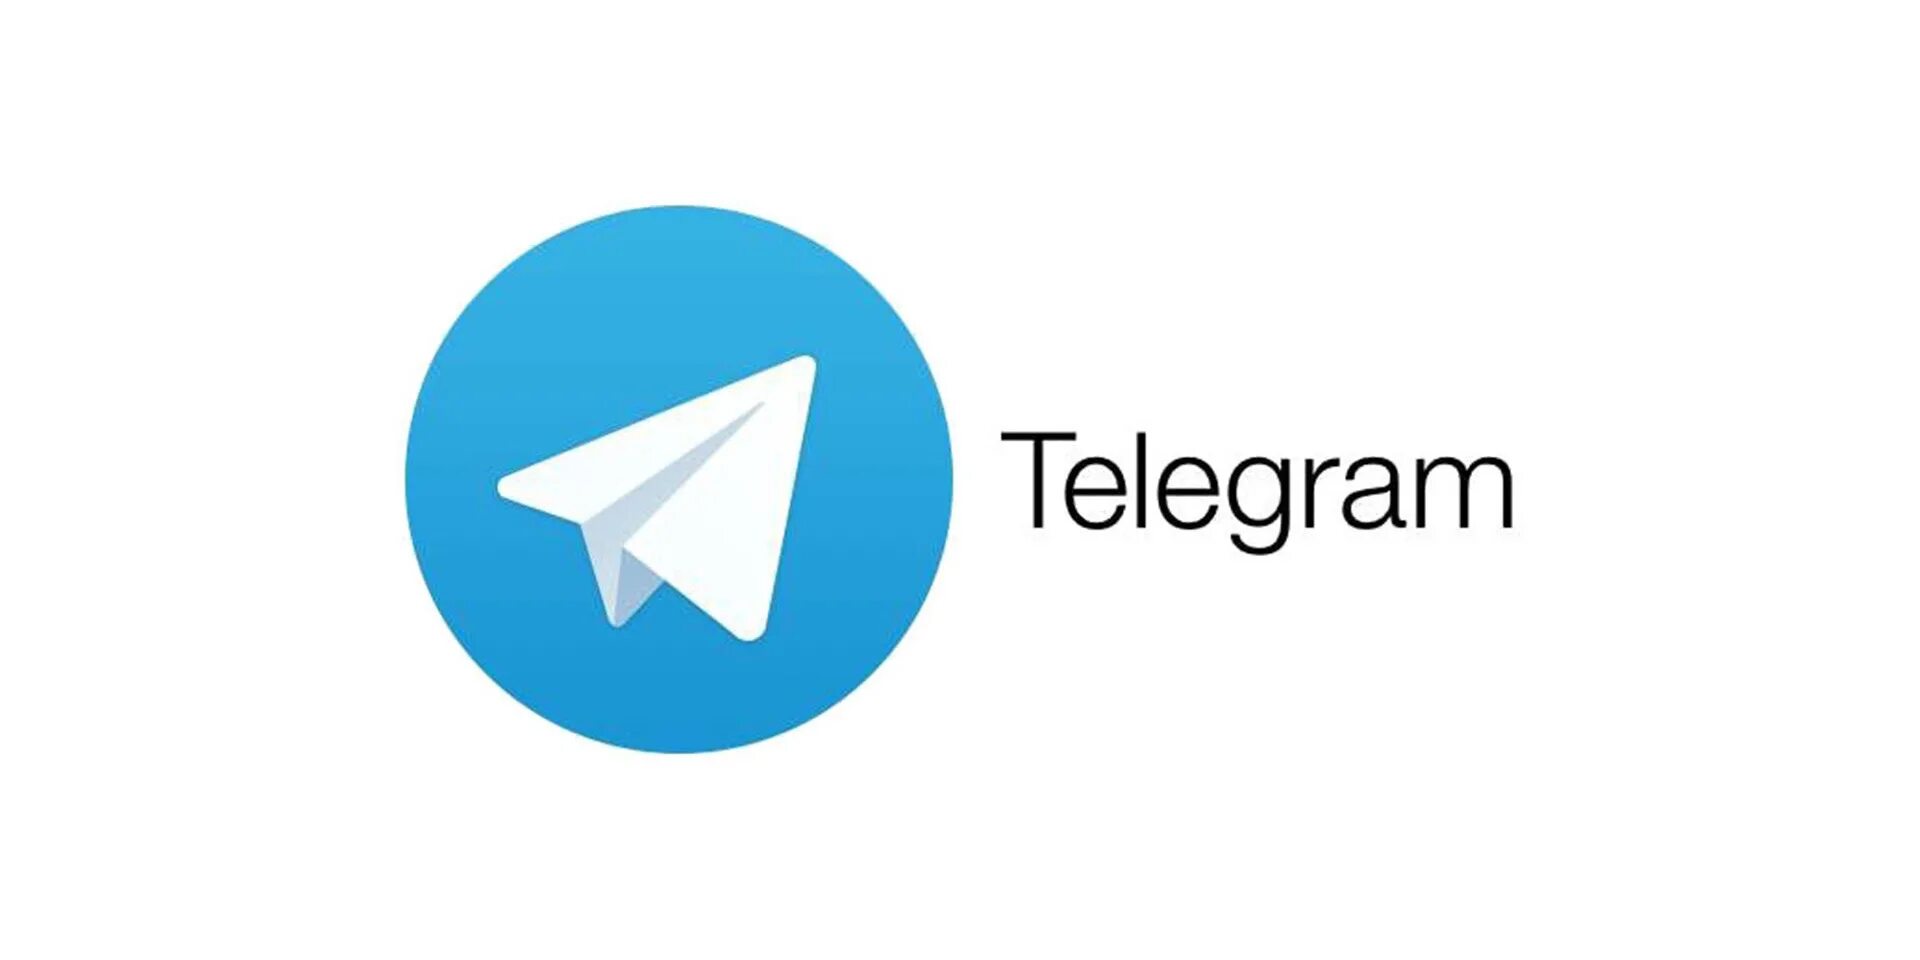 Эмблема телеграмма. Значок телеграмм канала. Логотип для телеграмм канала. Щначок телеграммканал.